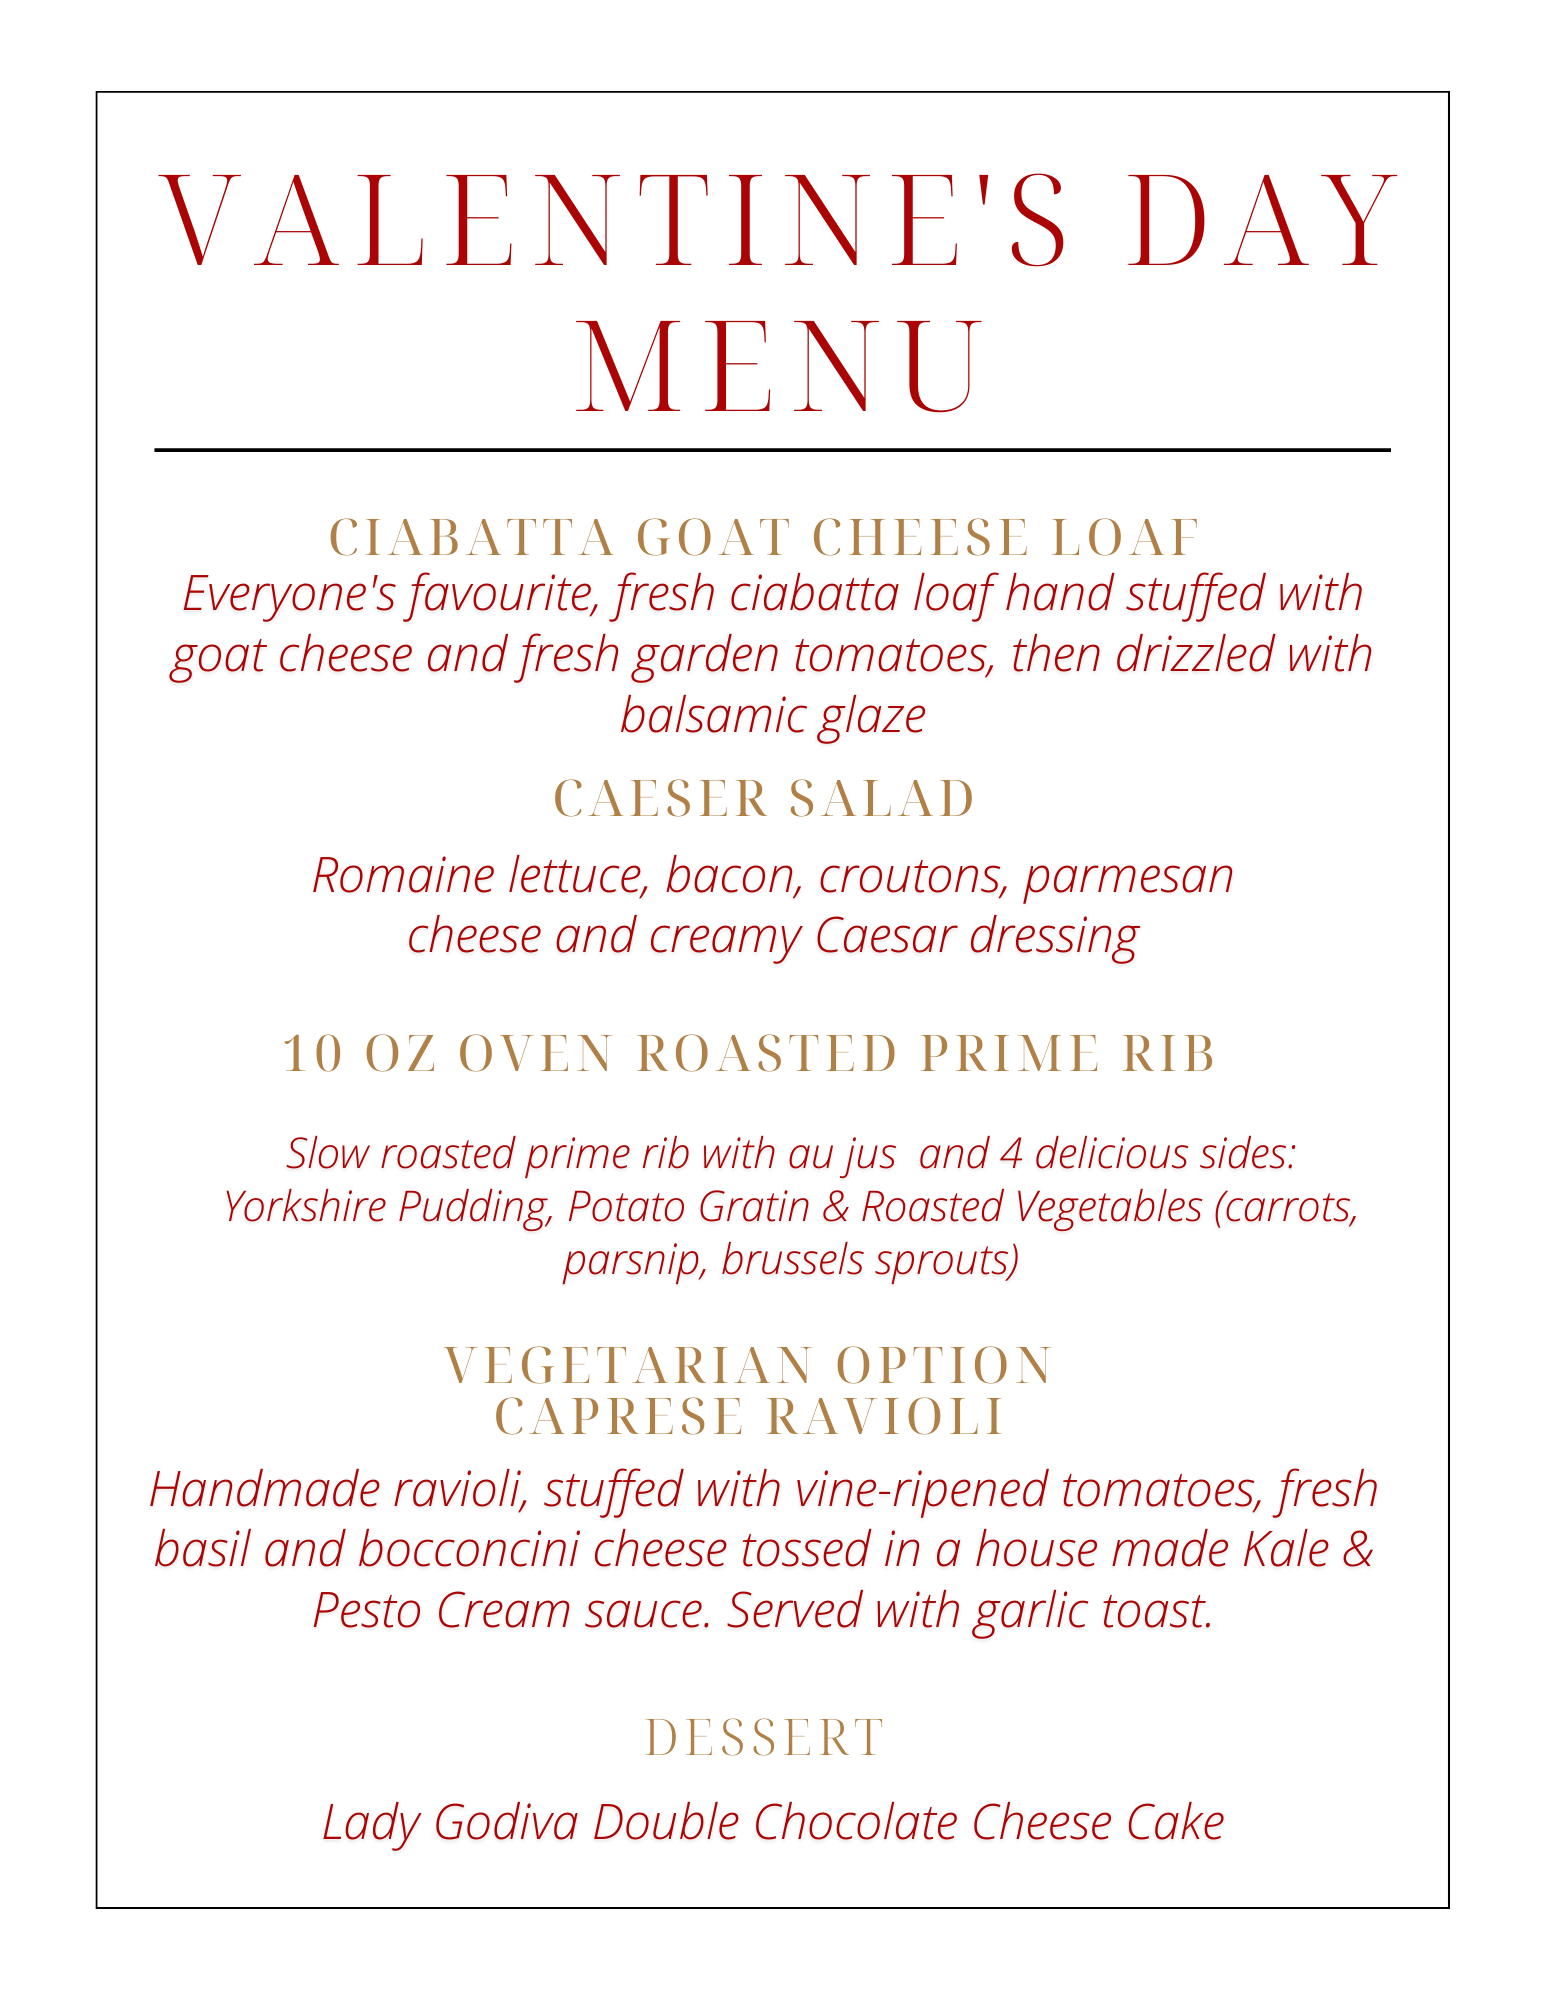 Valentine's Day - dinner menu at the Guild Inn